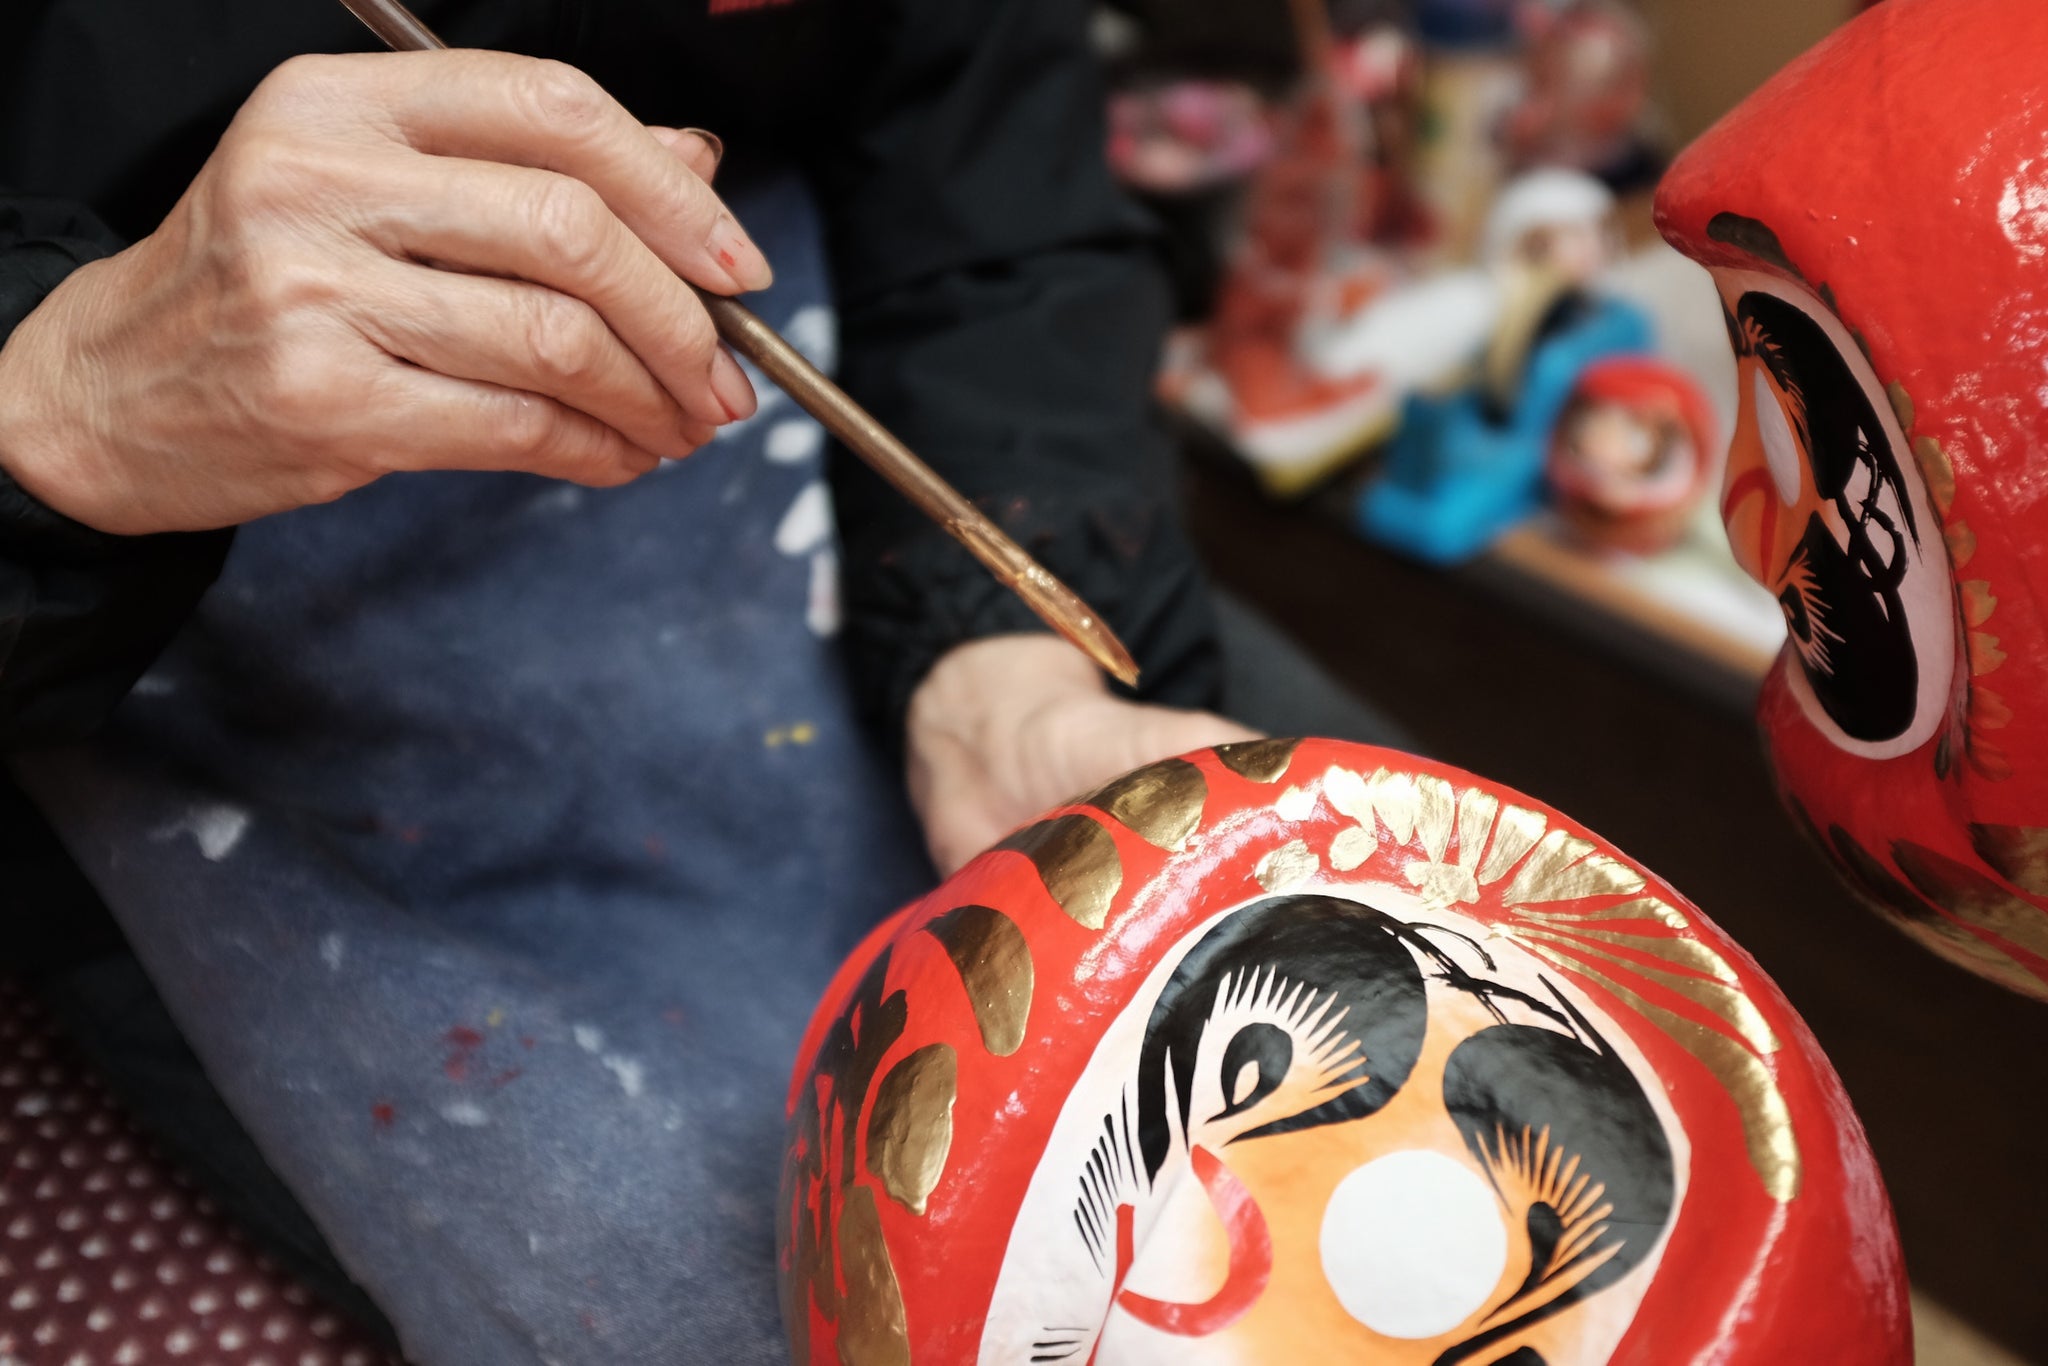 japanese craftsman painting daruma dolls by hand